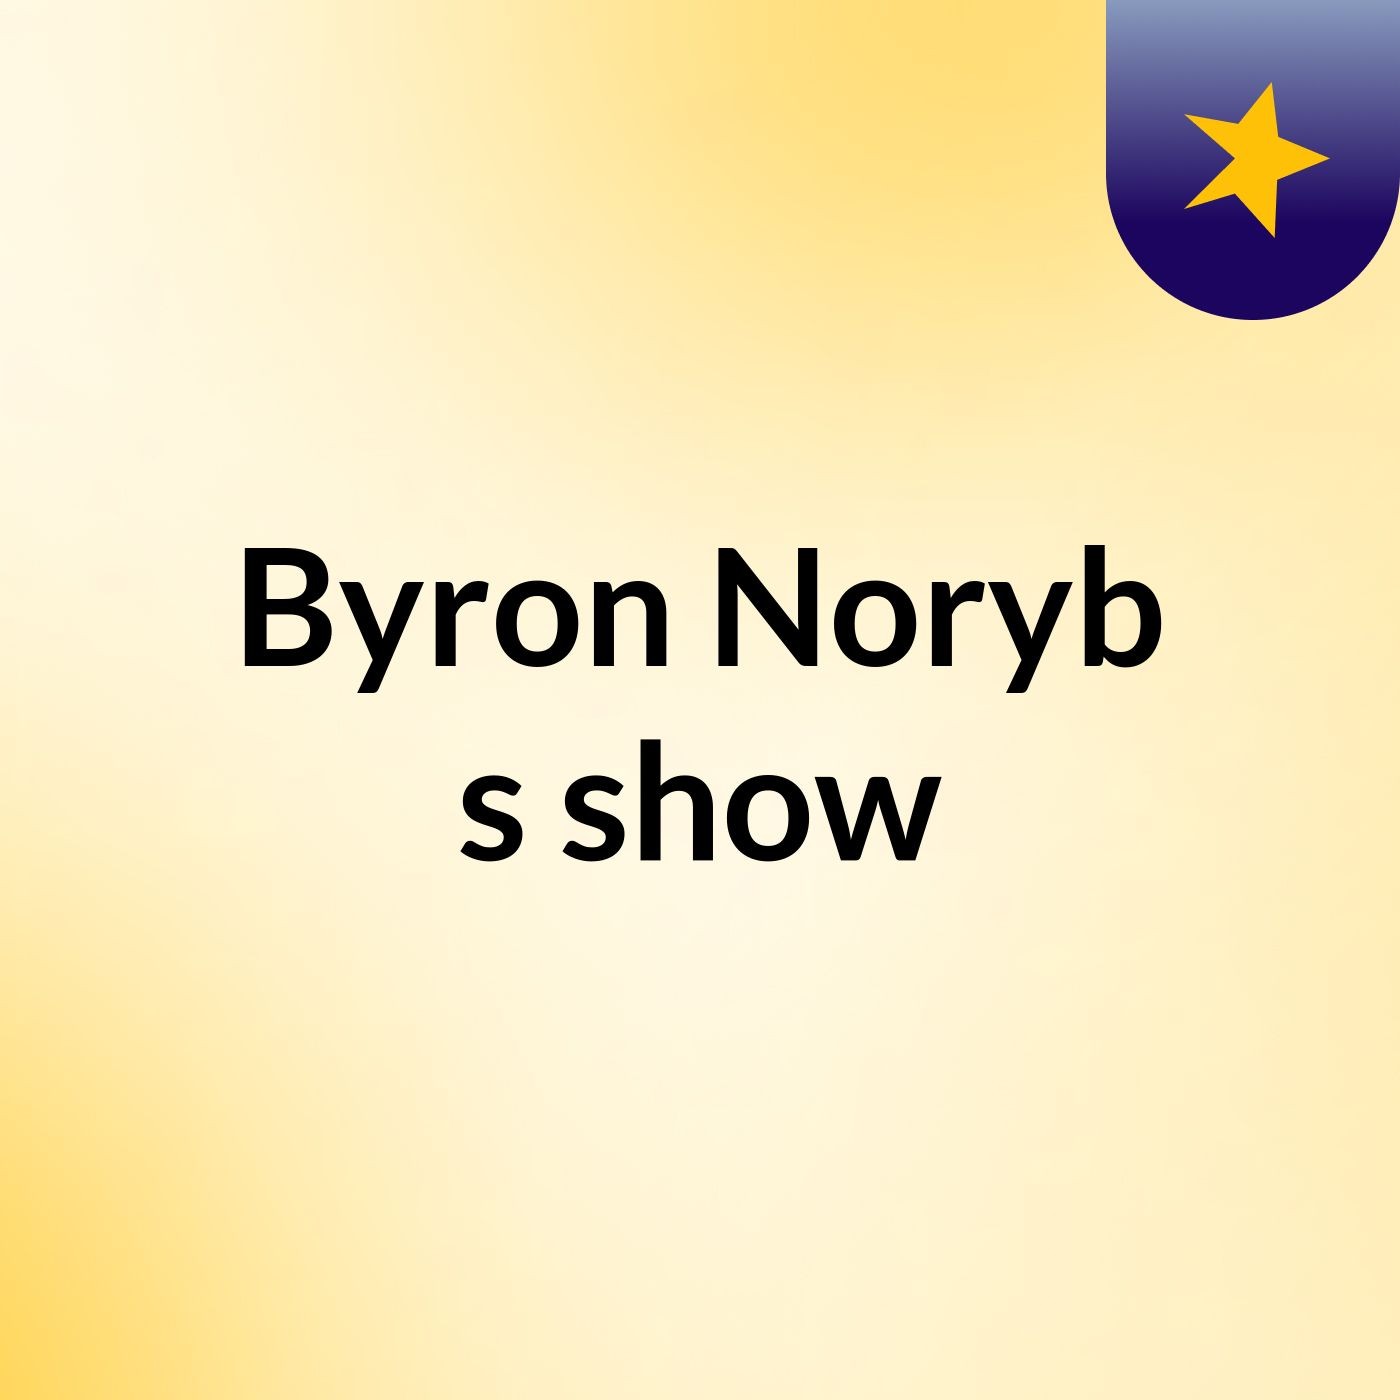 Byron Noryb's show